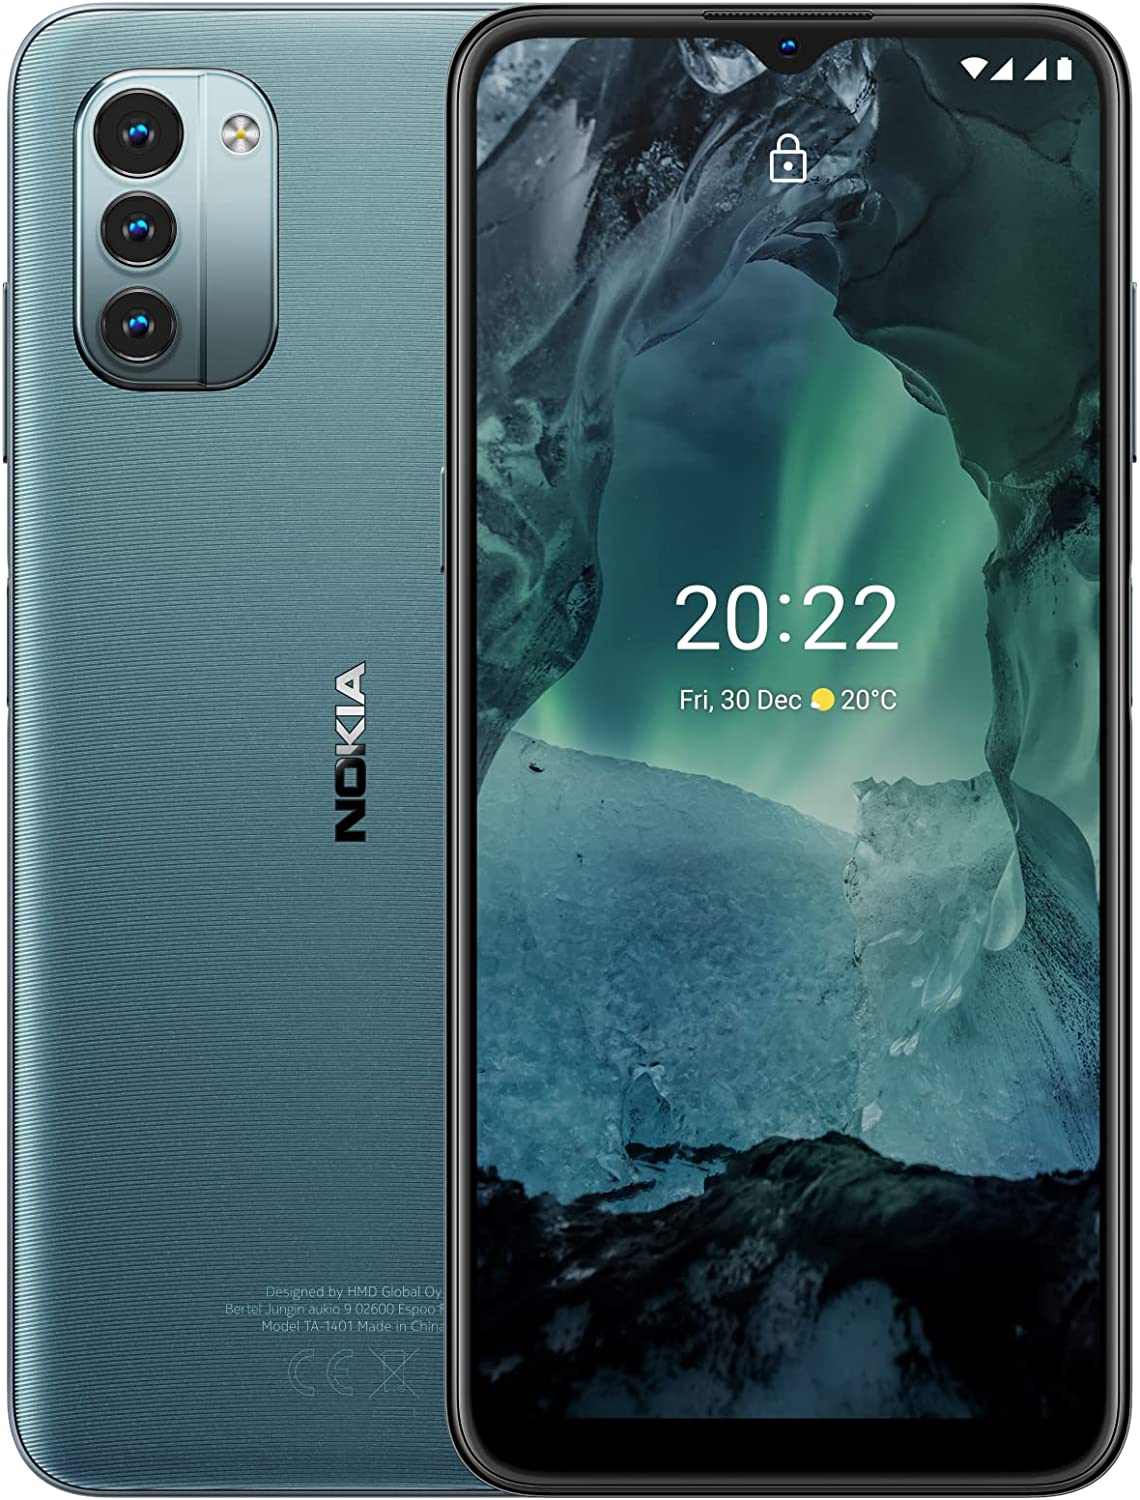 Nokia G11 32GB Mobile Phone - Charcoal / Ice Sim Free